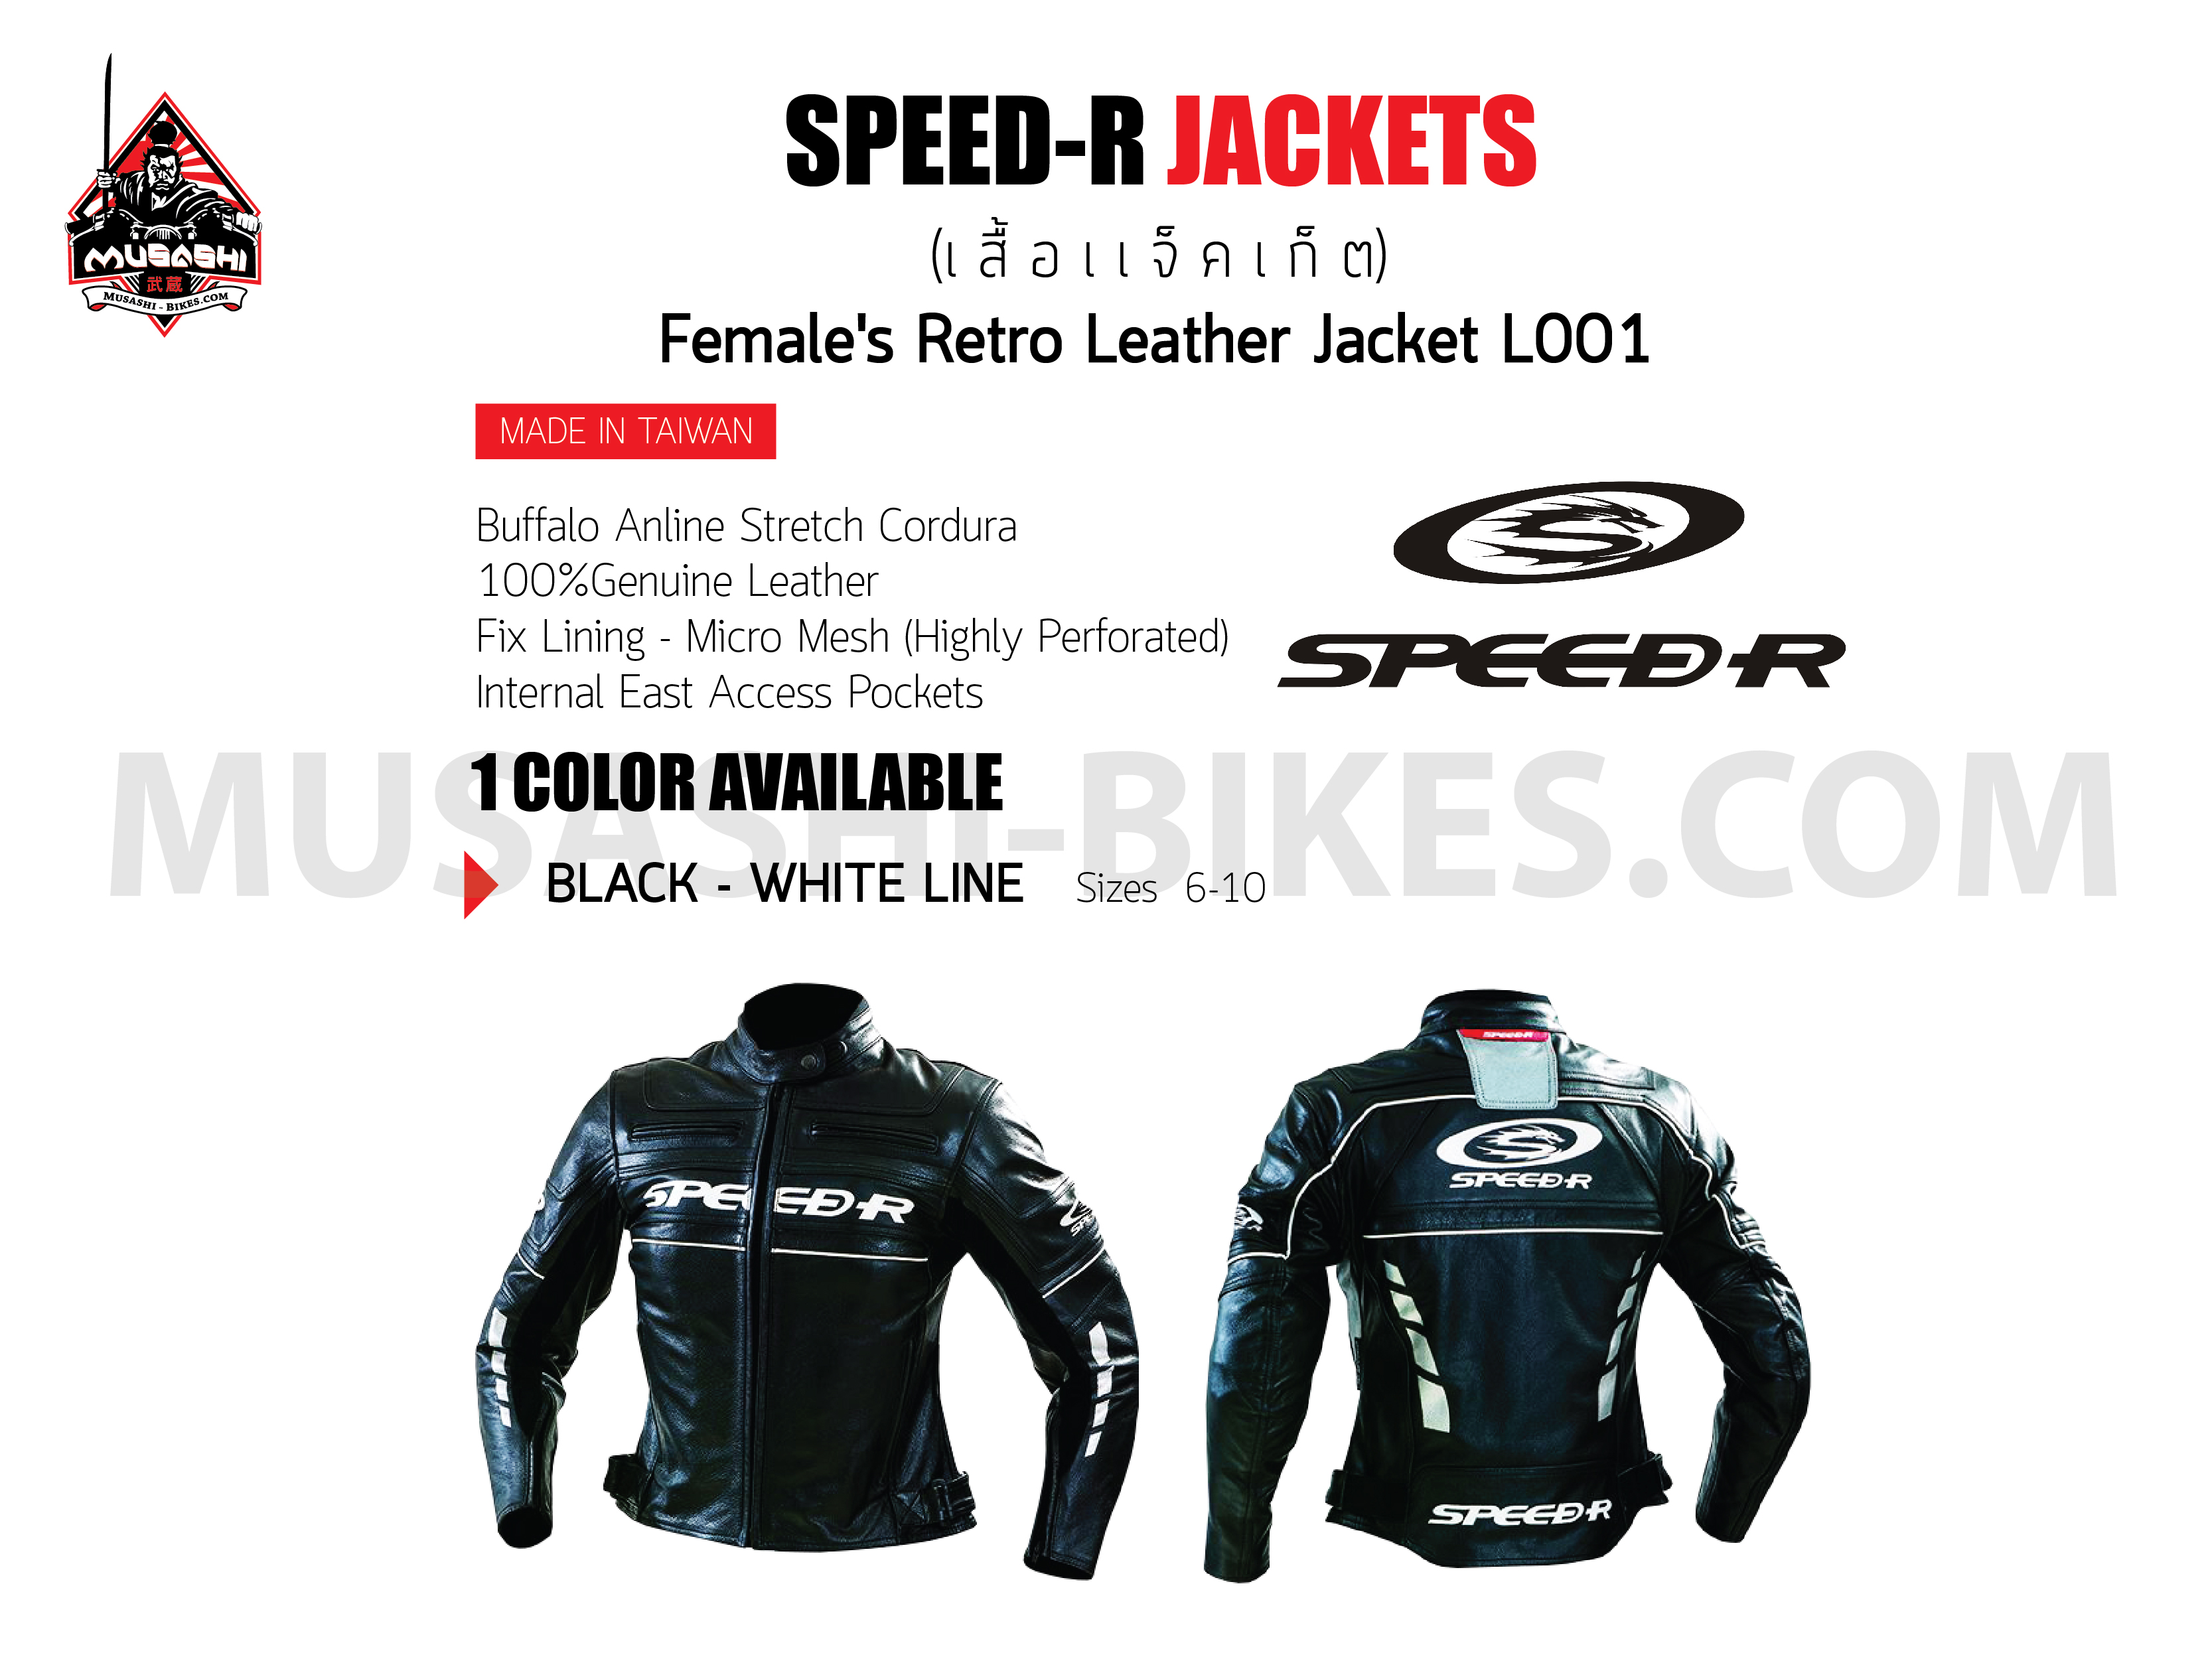 Female's Retro Leather Jacket L001